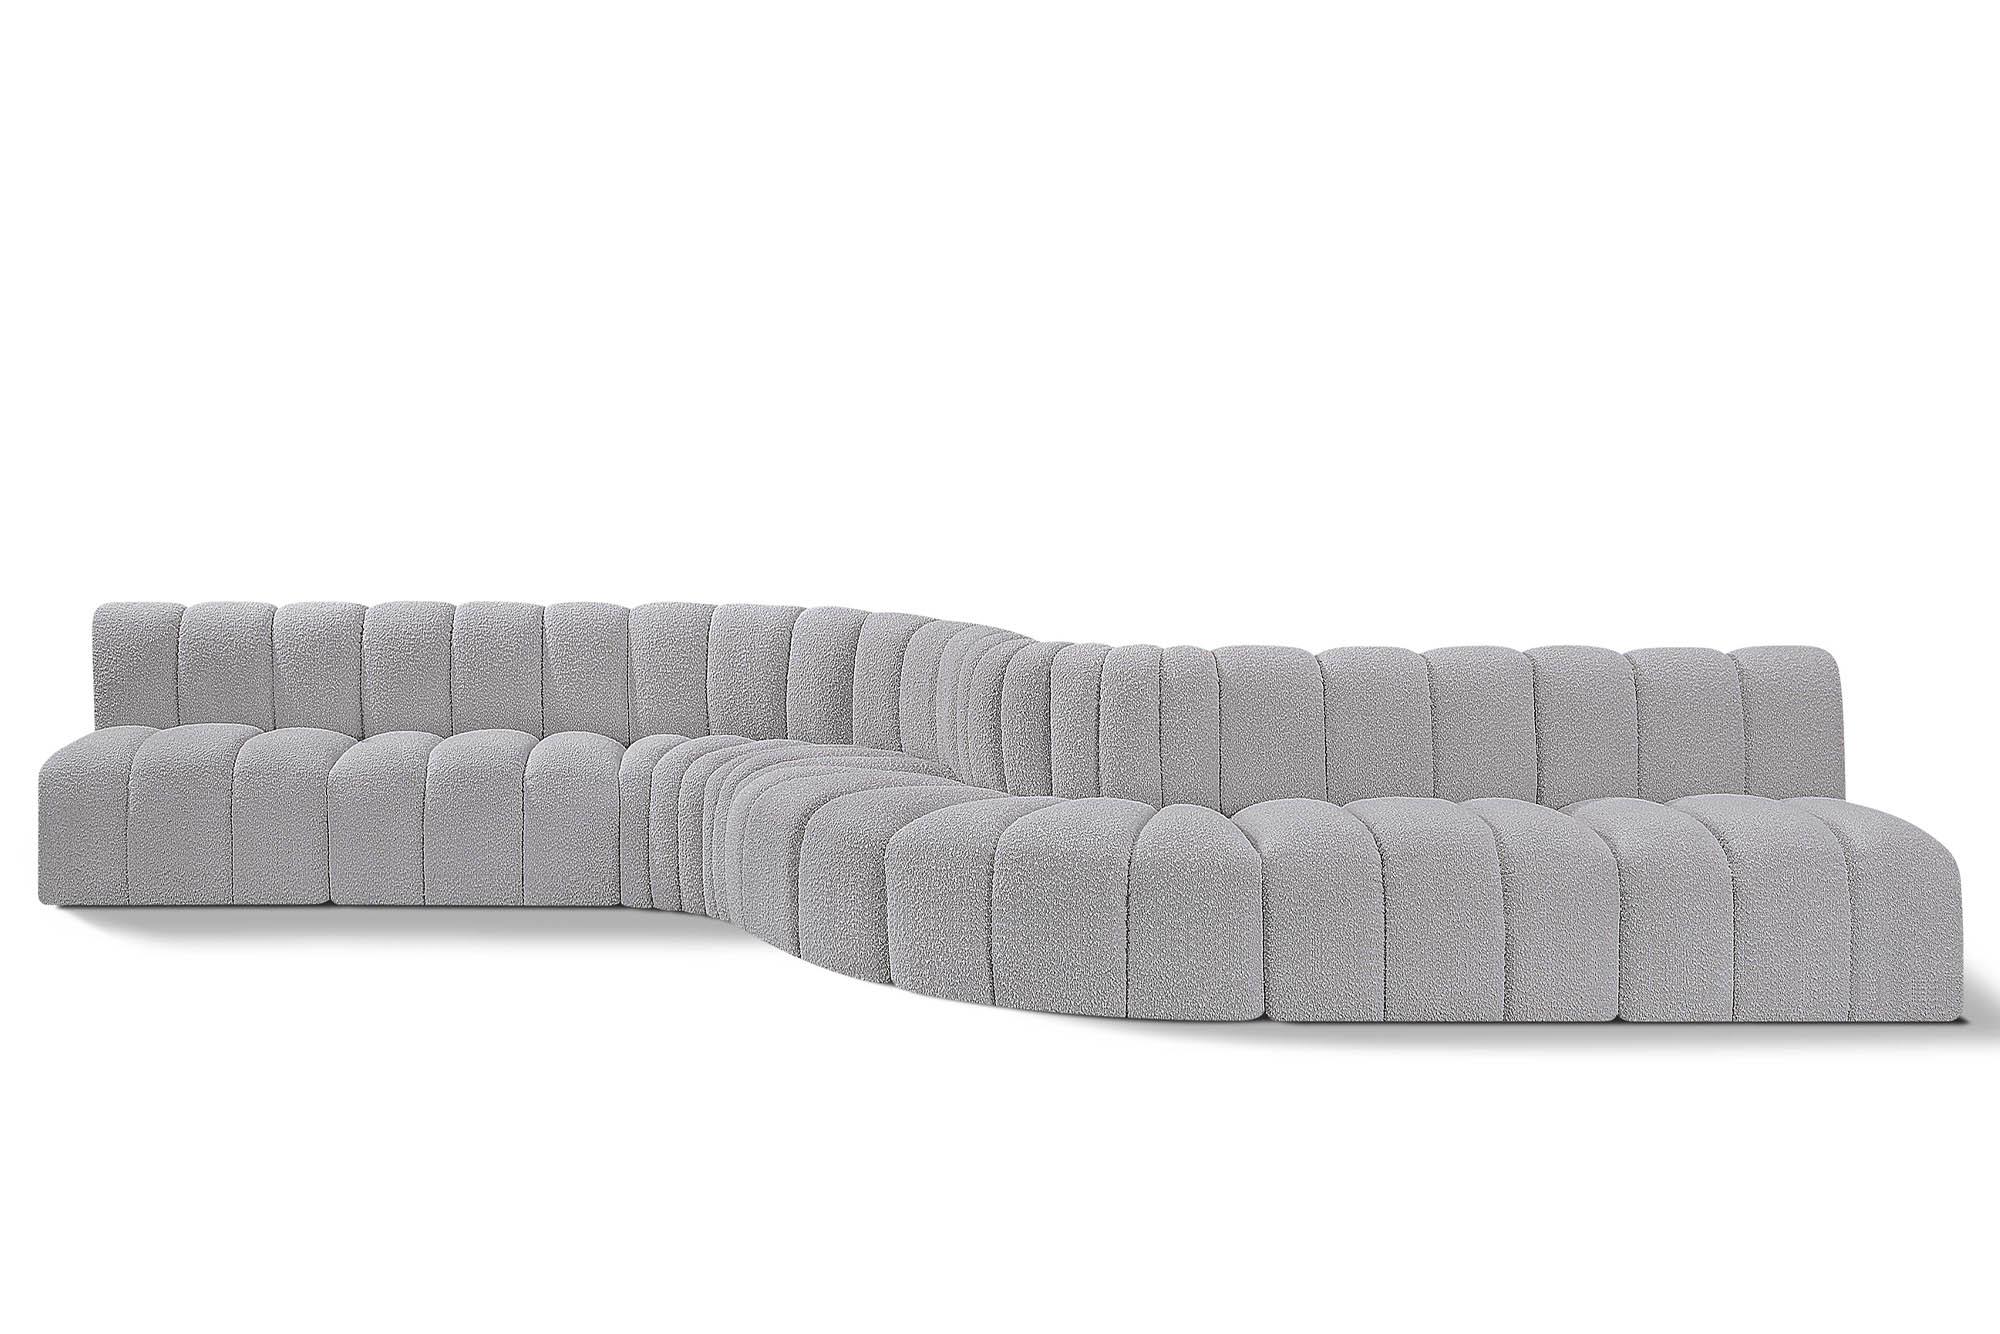 Contemporary, Modern Modular Sectional Sofa ARC 102Grey-S8C 102Grey-S8C in Gray 